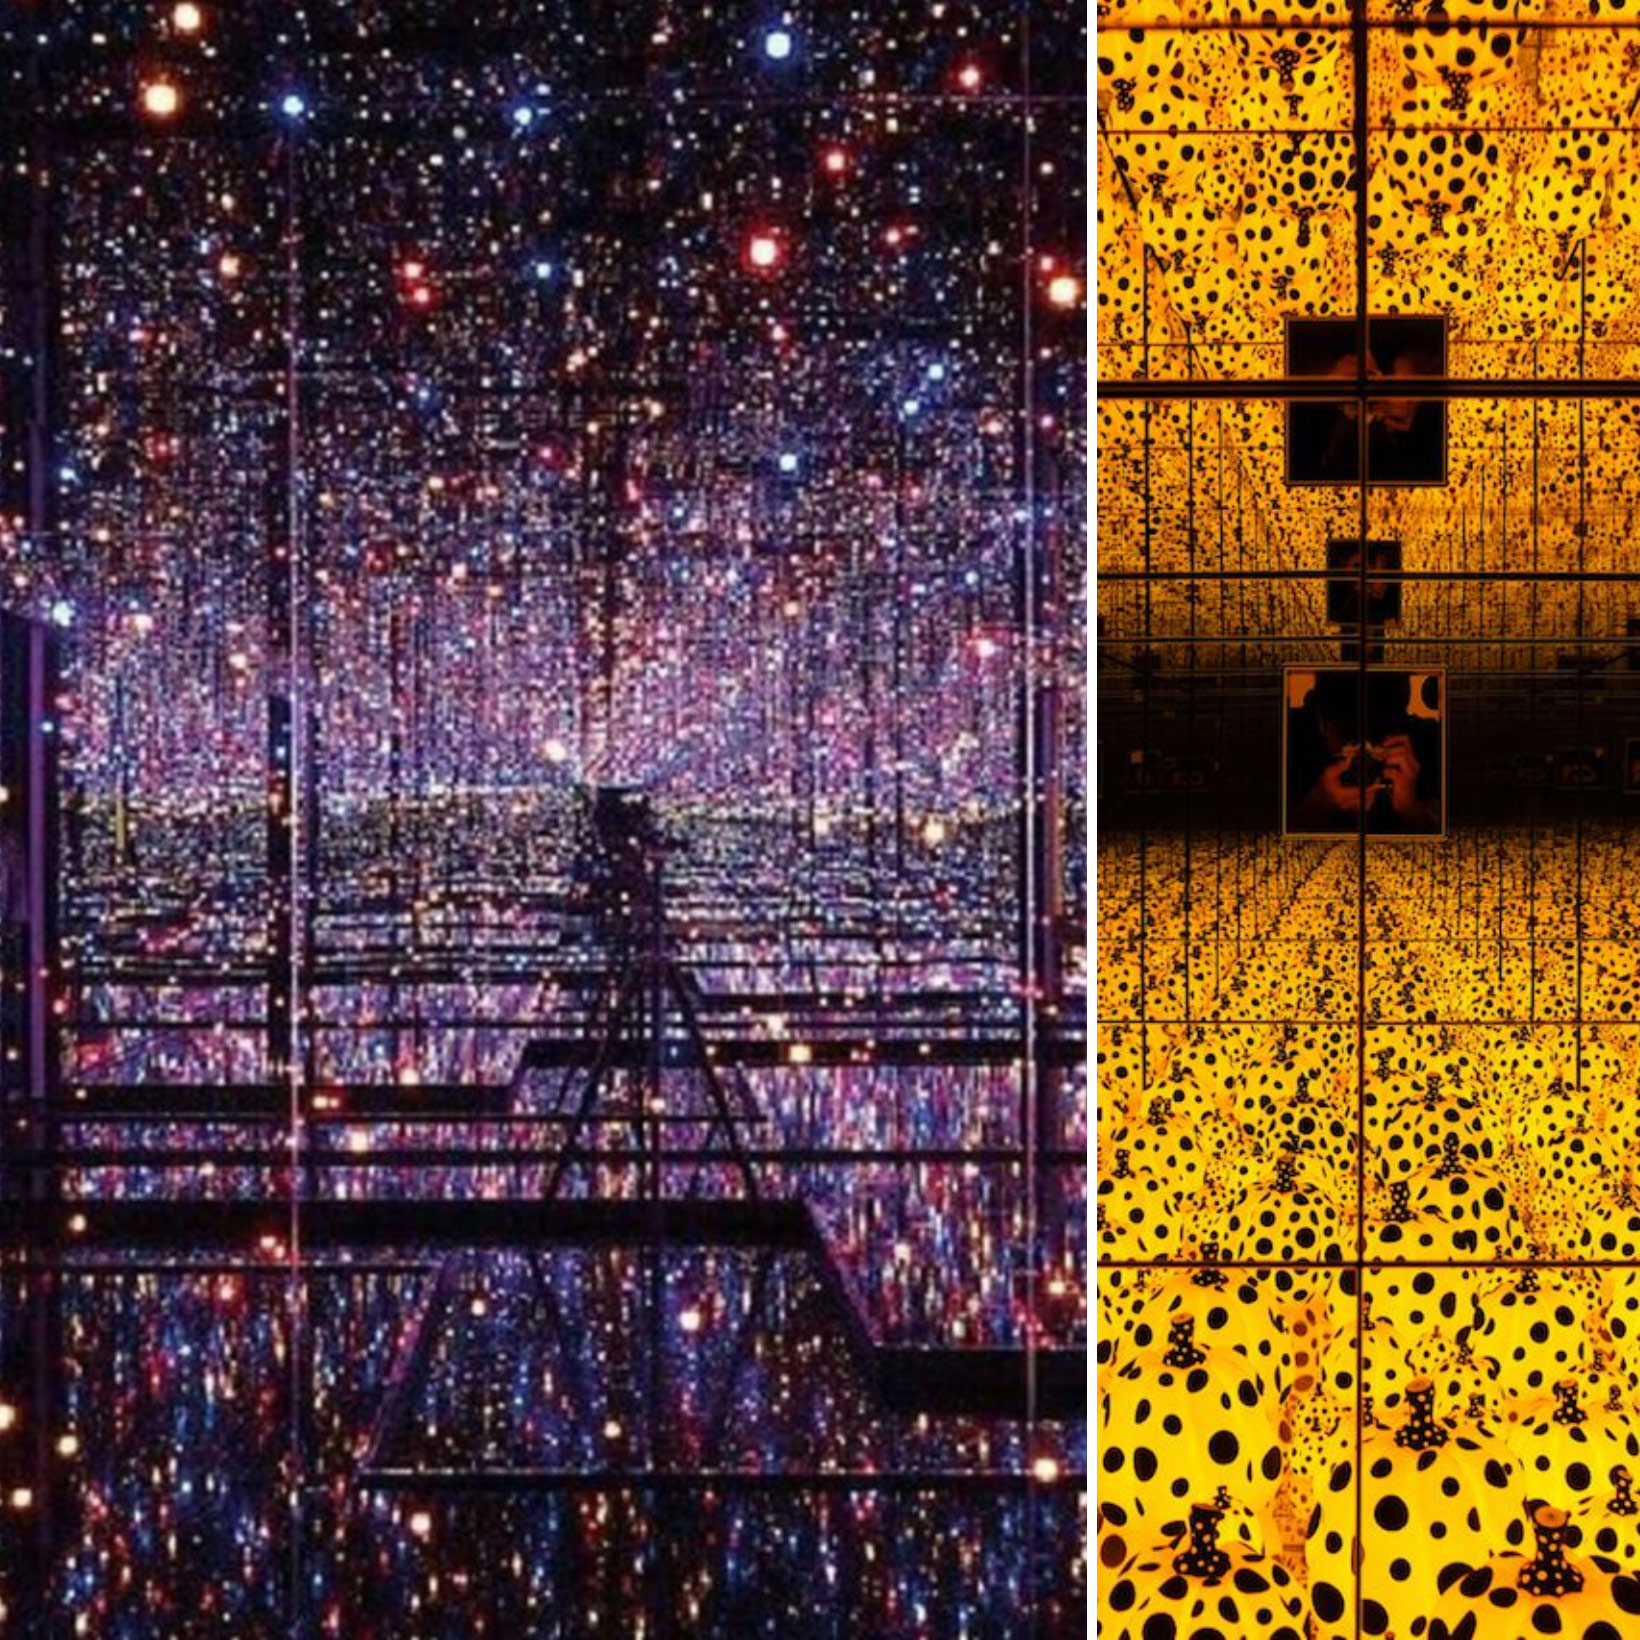 Infinity Mirrored Room by Yayoi Kusama